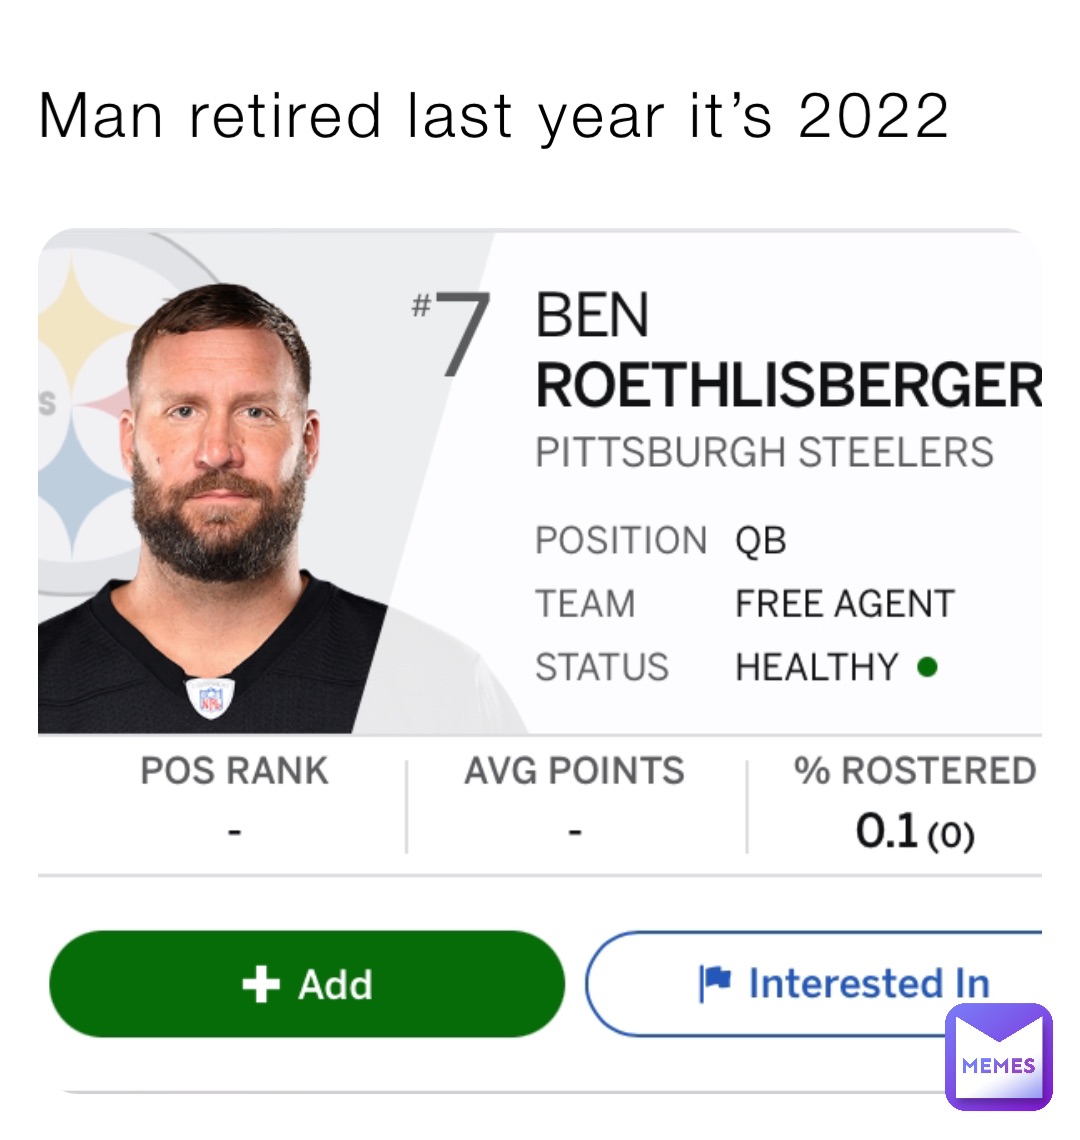 Man retired last year it’s 2022